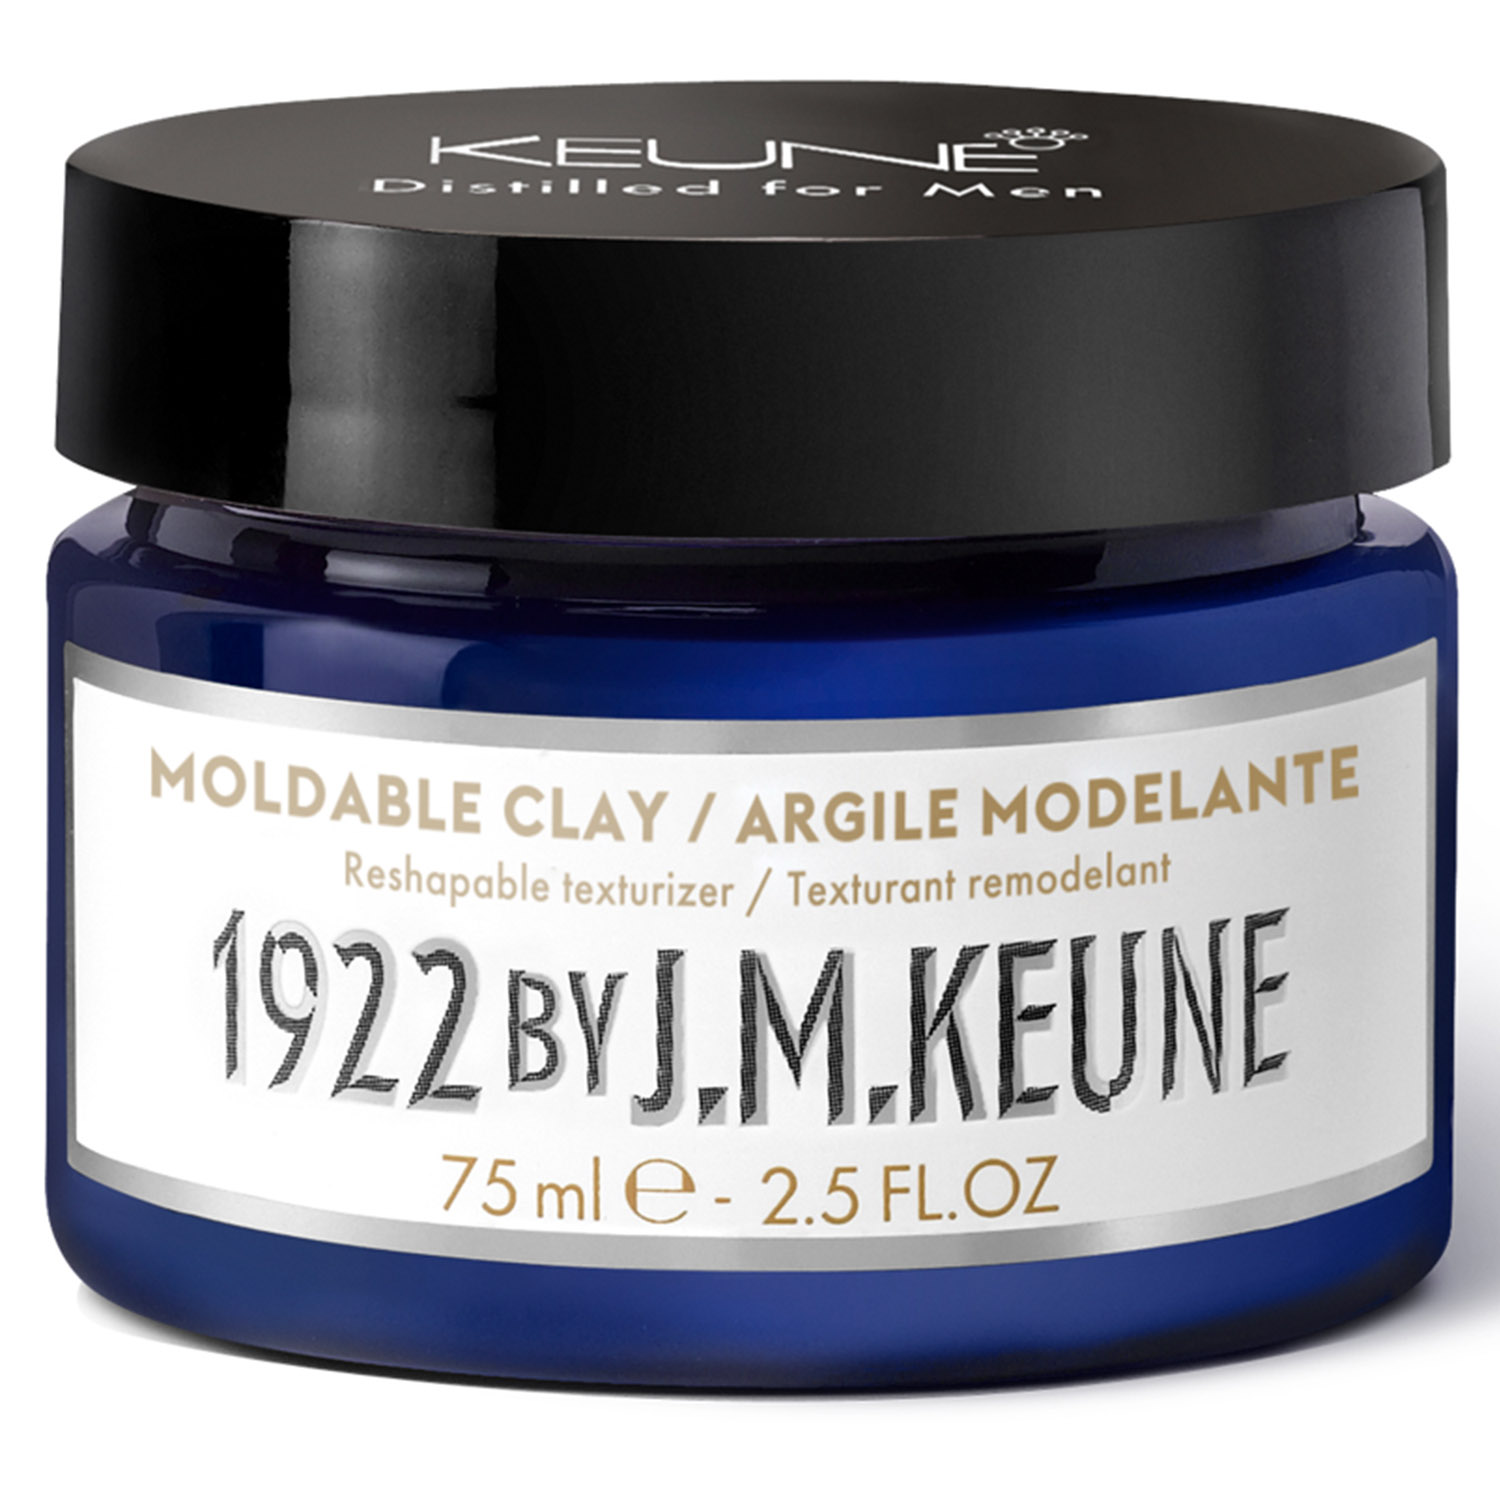 Keune Моделирующая глина для укладки волос Moldable Clay, 75 мл (Keune, 1922 by J.M. Keune) моделирующая глина для волос 1922 by j m keune moldable clay 75мл